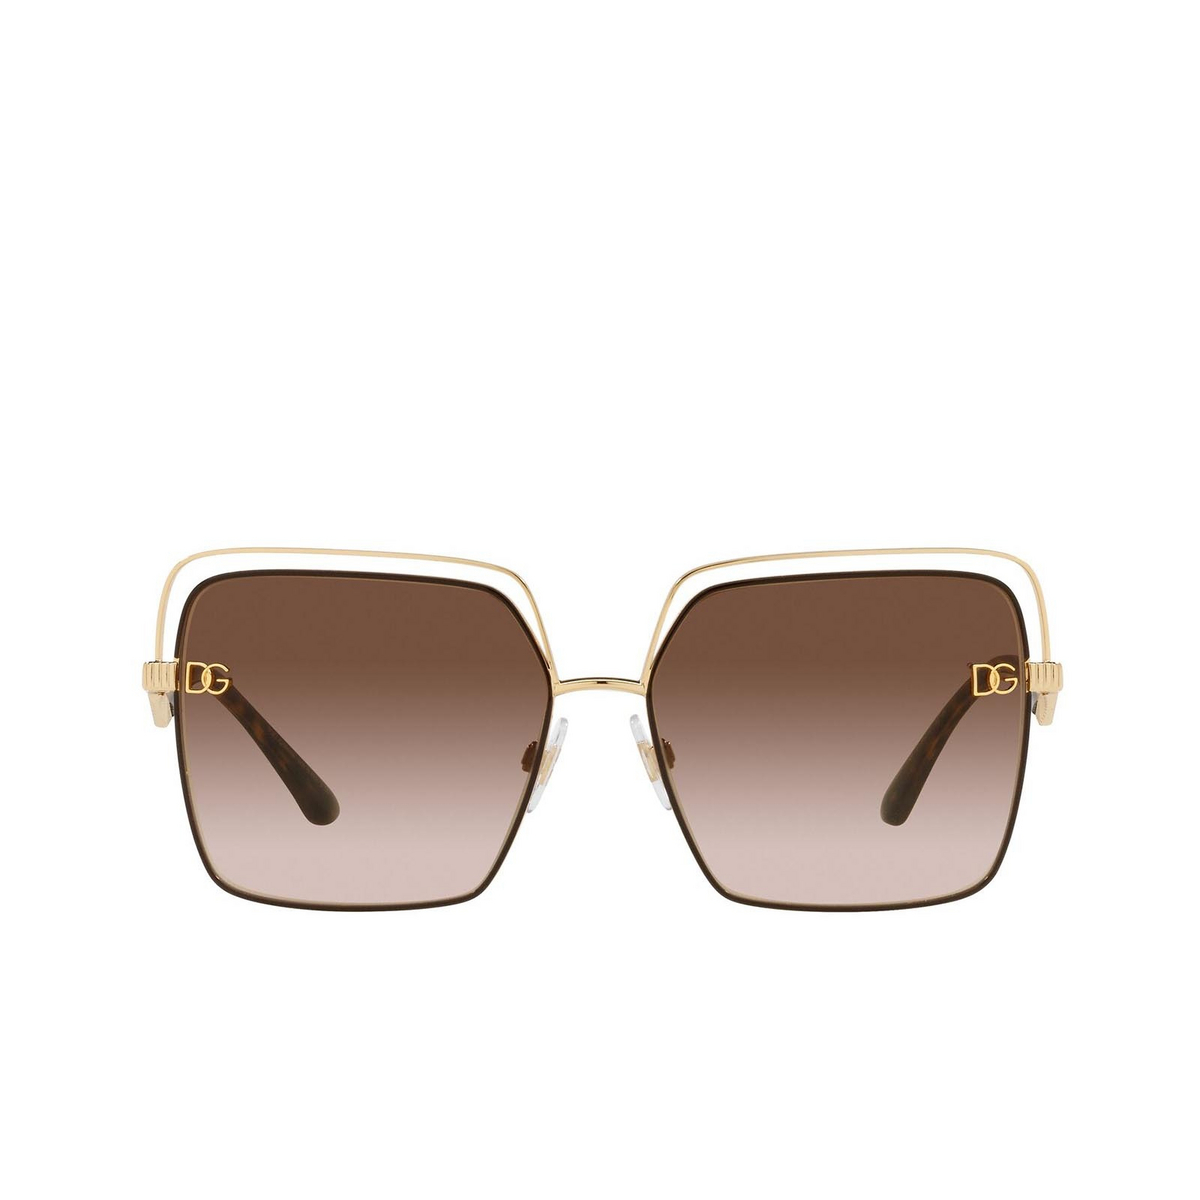 Dolce & Gabbana® Square Sunglasses: DG2268 color Gold/brown 134413 - front view.